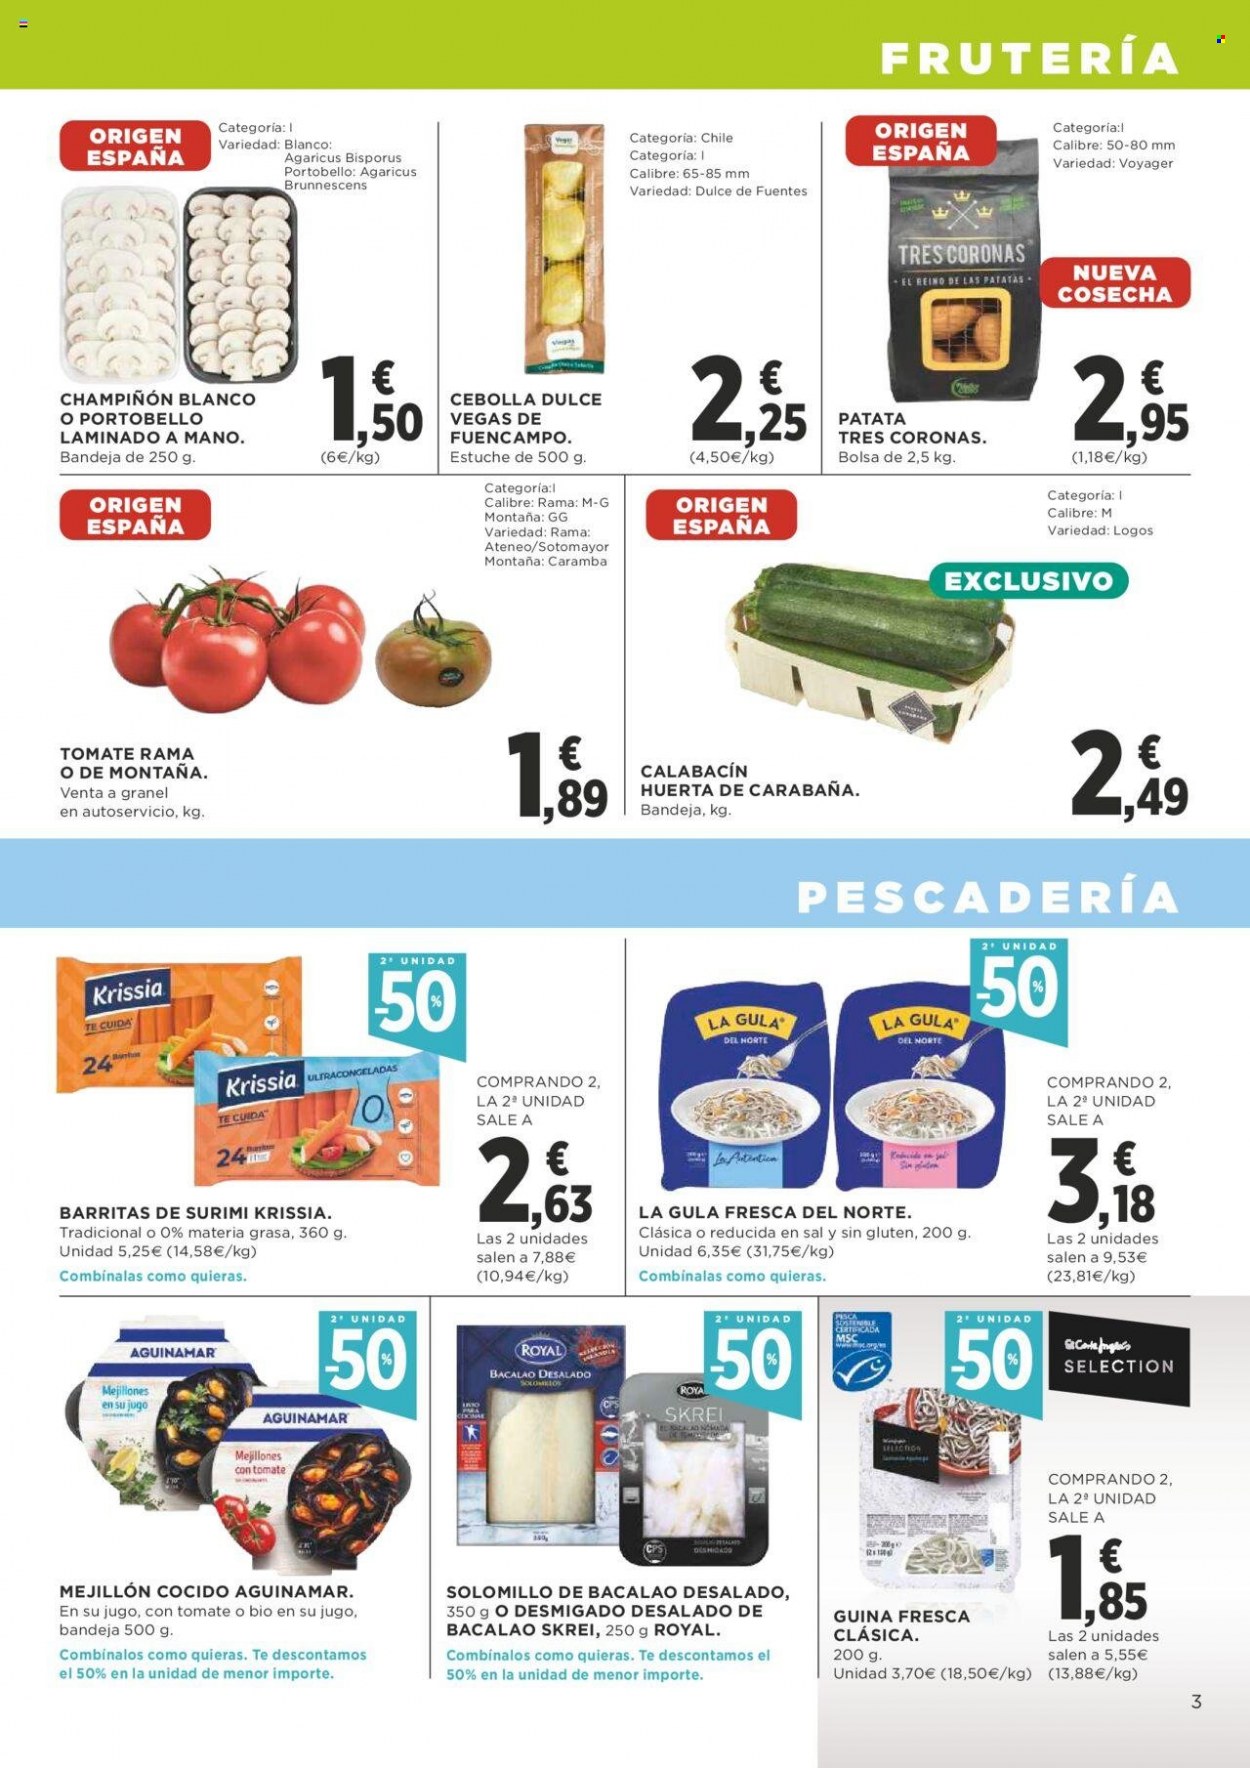 thumbnail - Folleto actual Supercor supermercados - 16/06/22 - 29/06/22 - Ventas - solomillo, cebolla, calabacín, champiñón, portobello, mejillones, surimi, La Gula del Norte. Página 3.